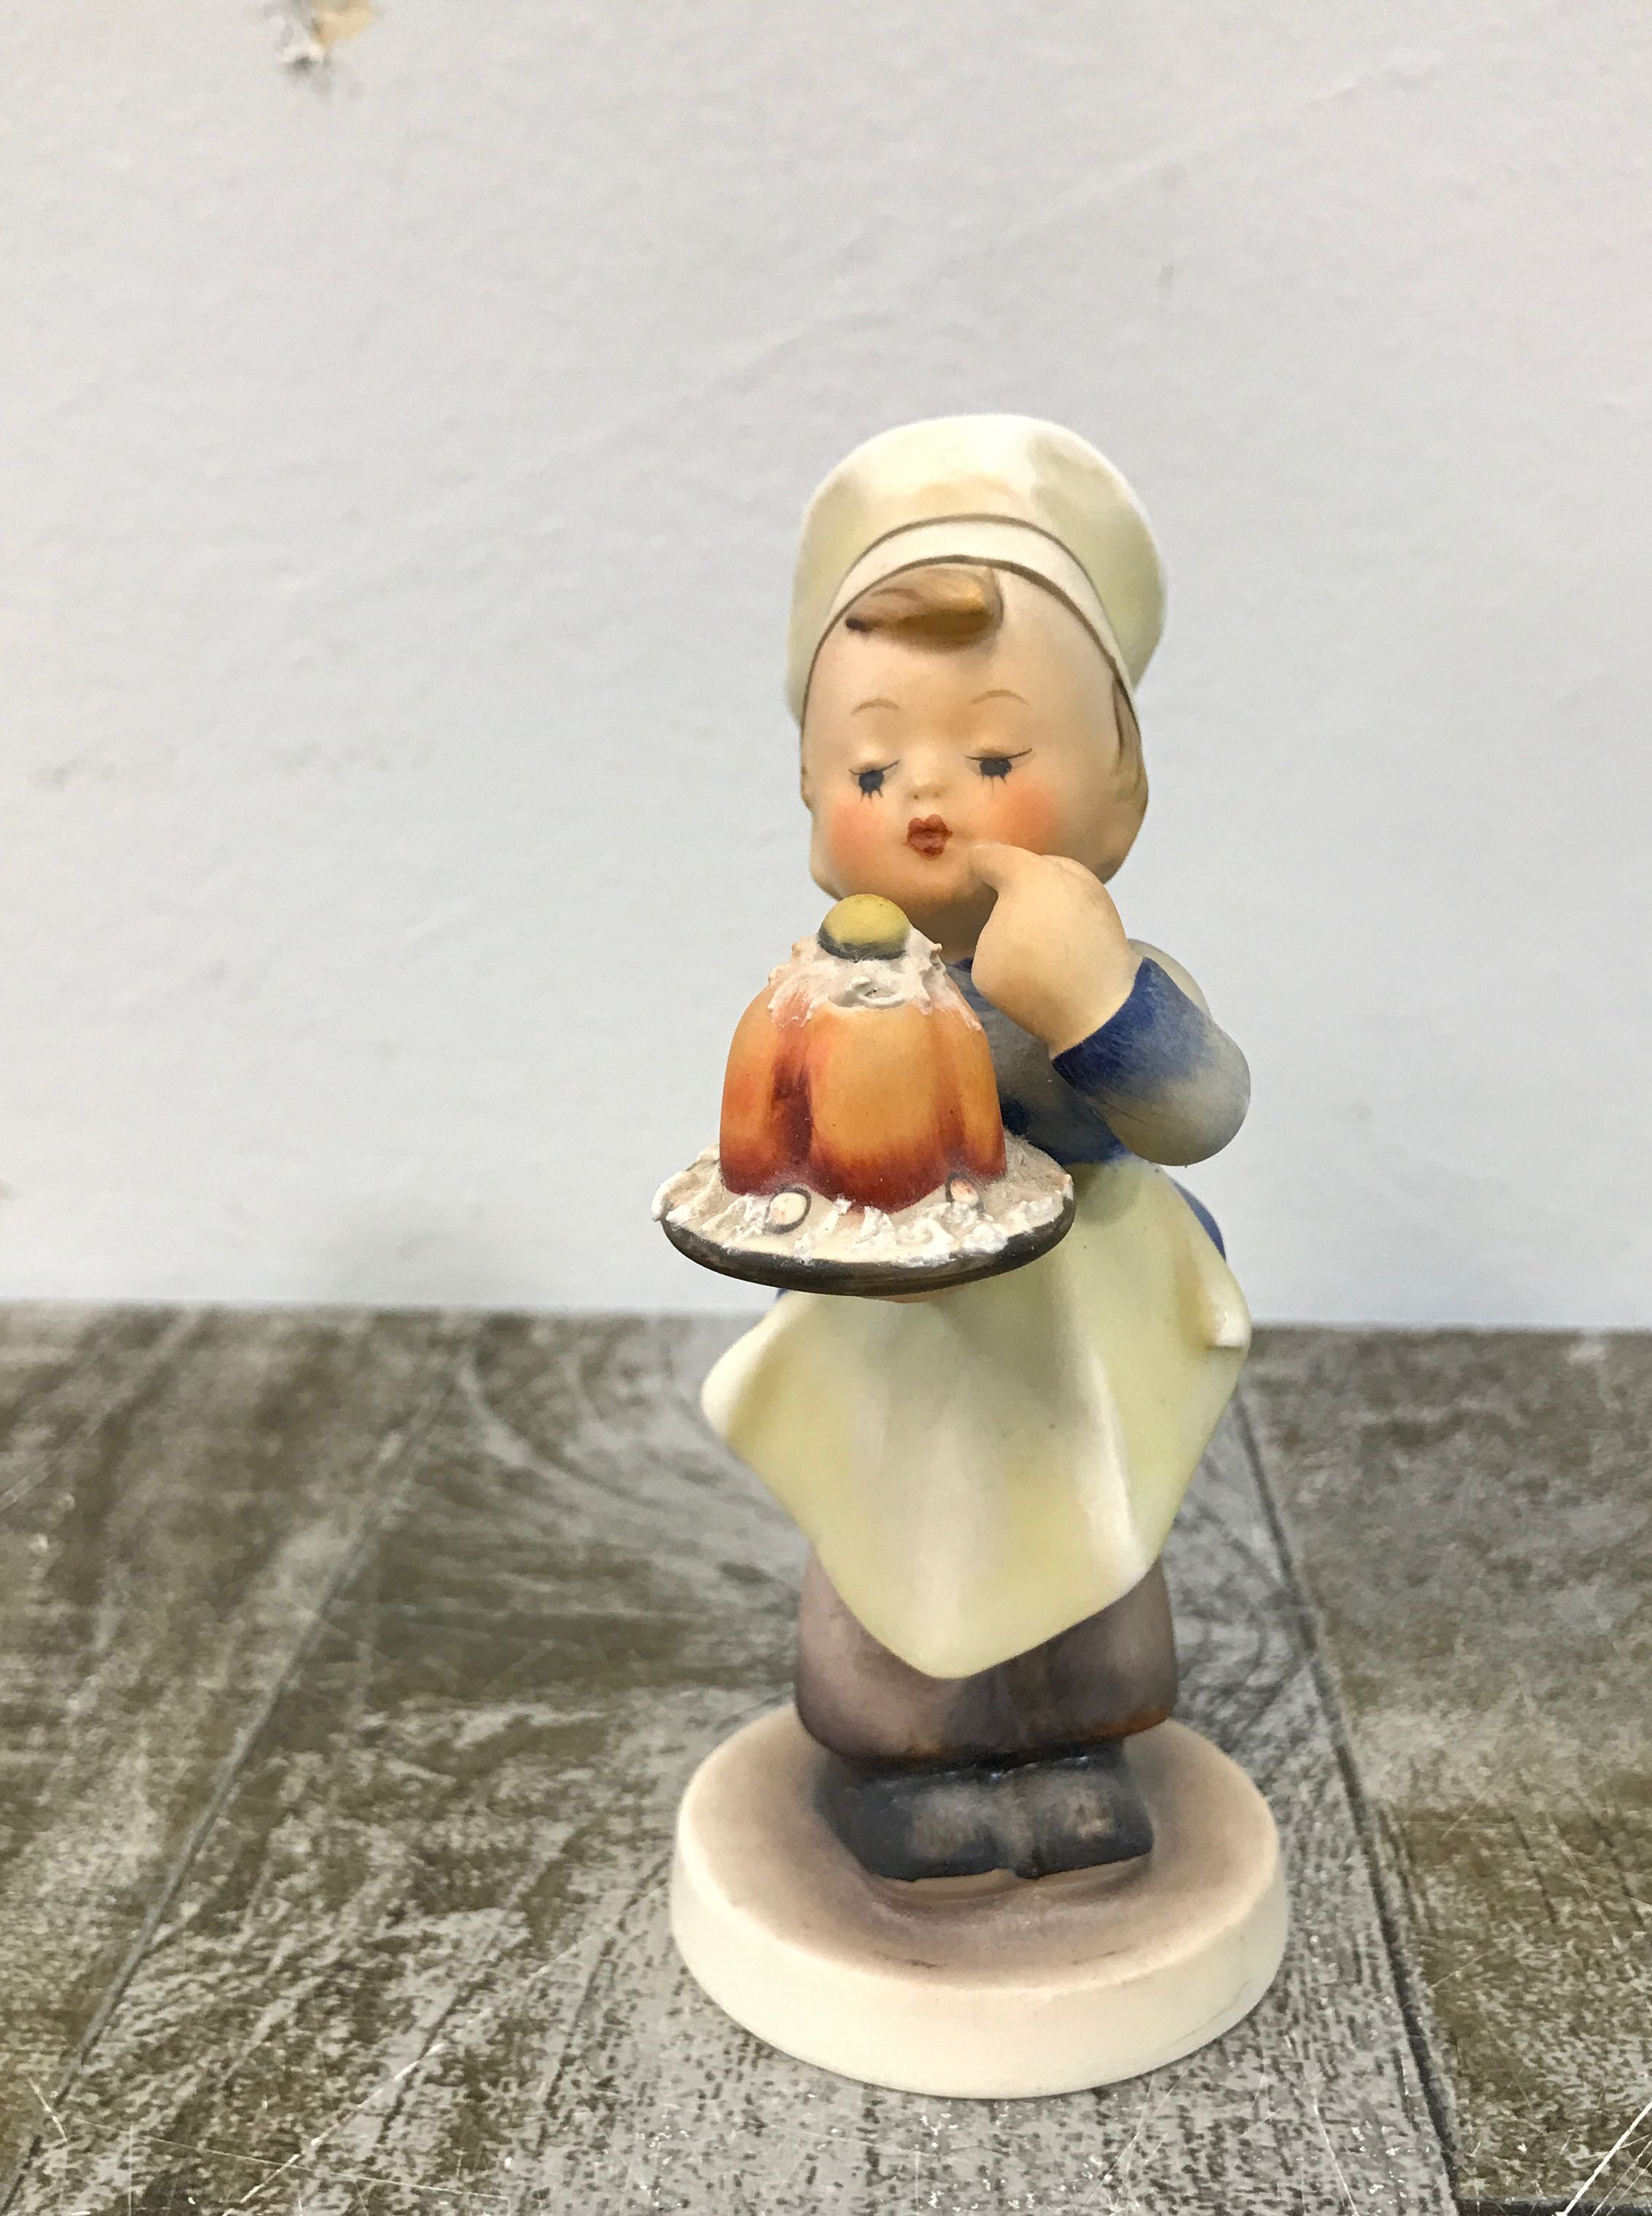 Hummel West Germany #128 "Little Baker" Figurine